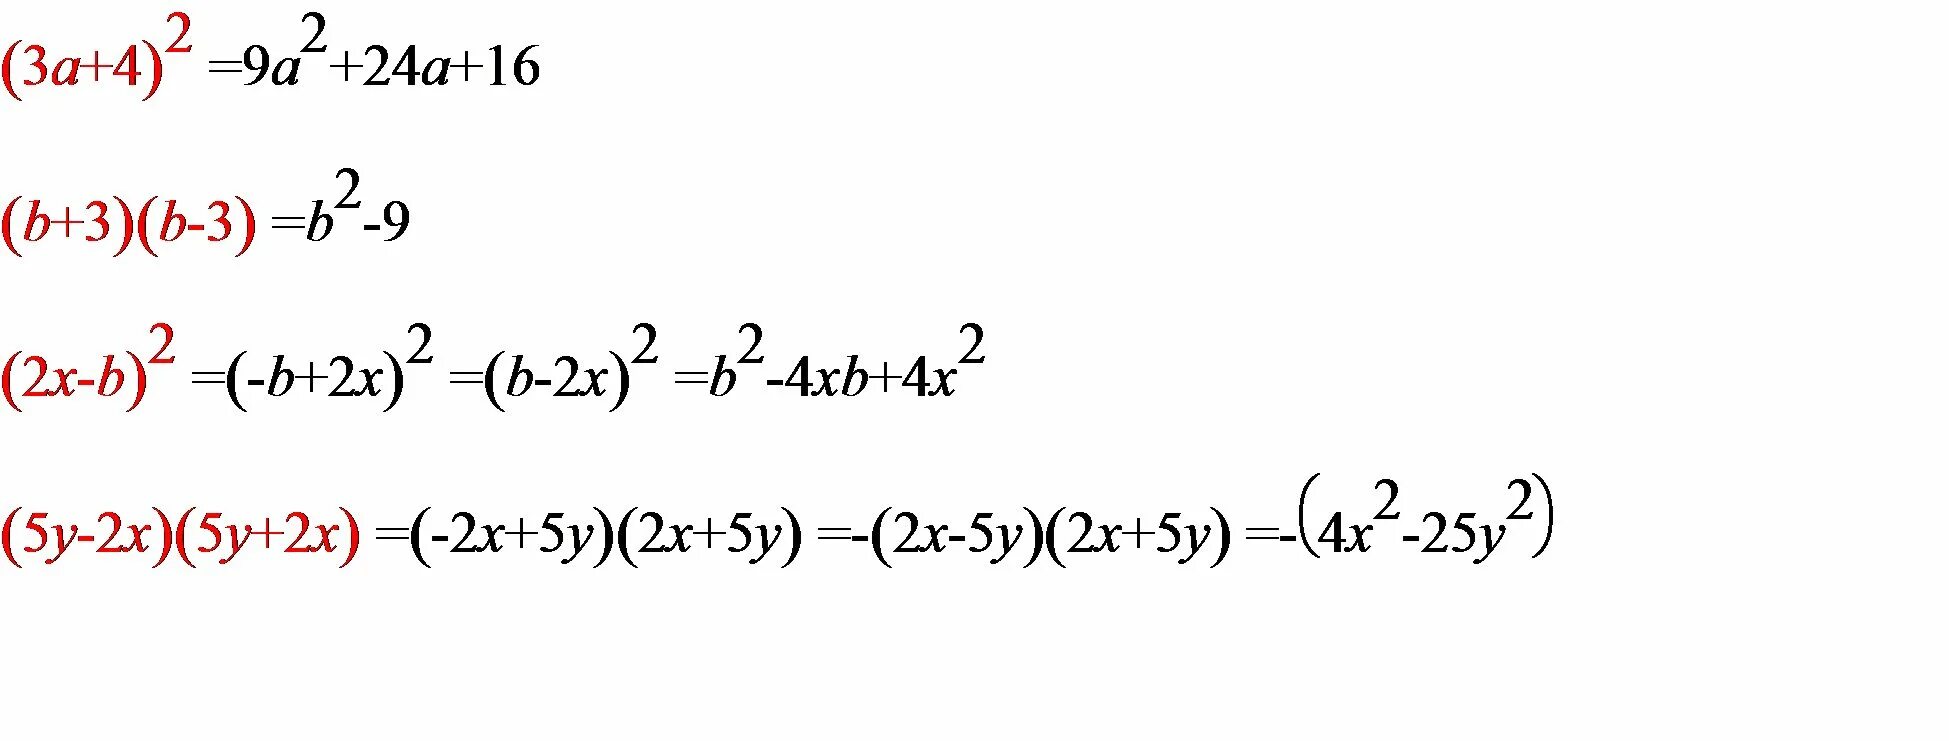 Преобразуйте в многочлен b+3 b-3. (X-Y)^2(X+Y) преобразование в многочлен. Преобразуйте выражение в многочлен. 0.7 5 6